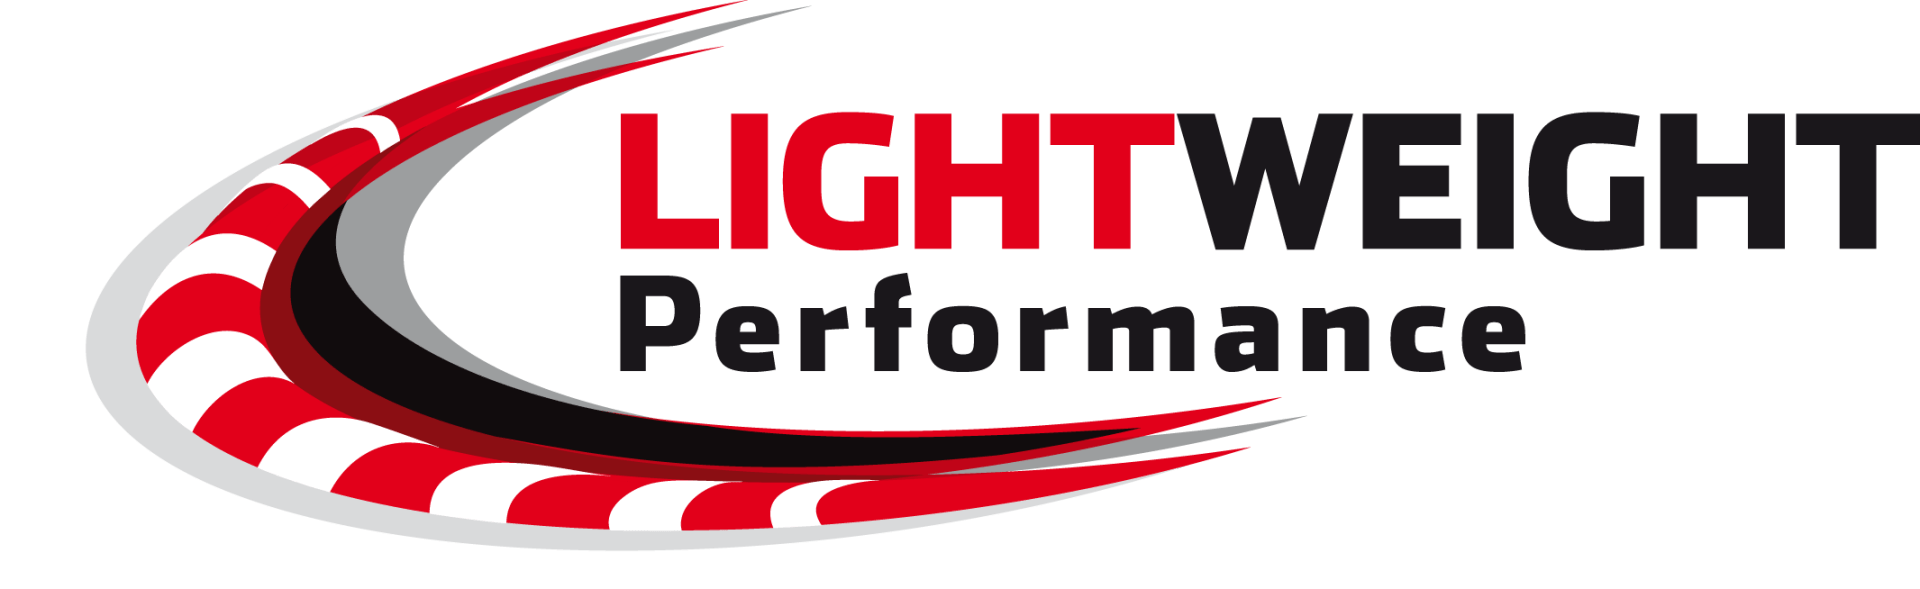 LIGHTWEIGHT Performance